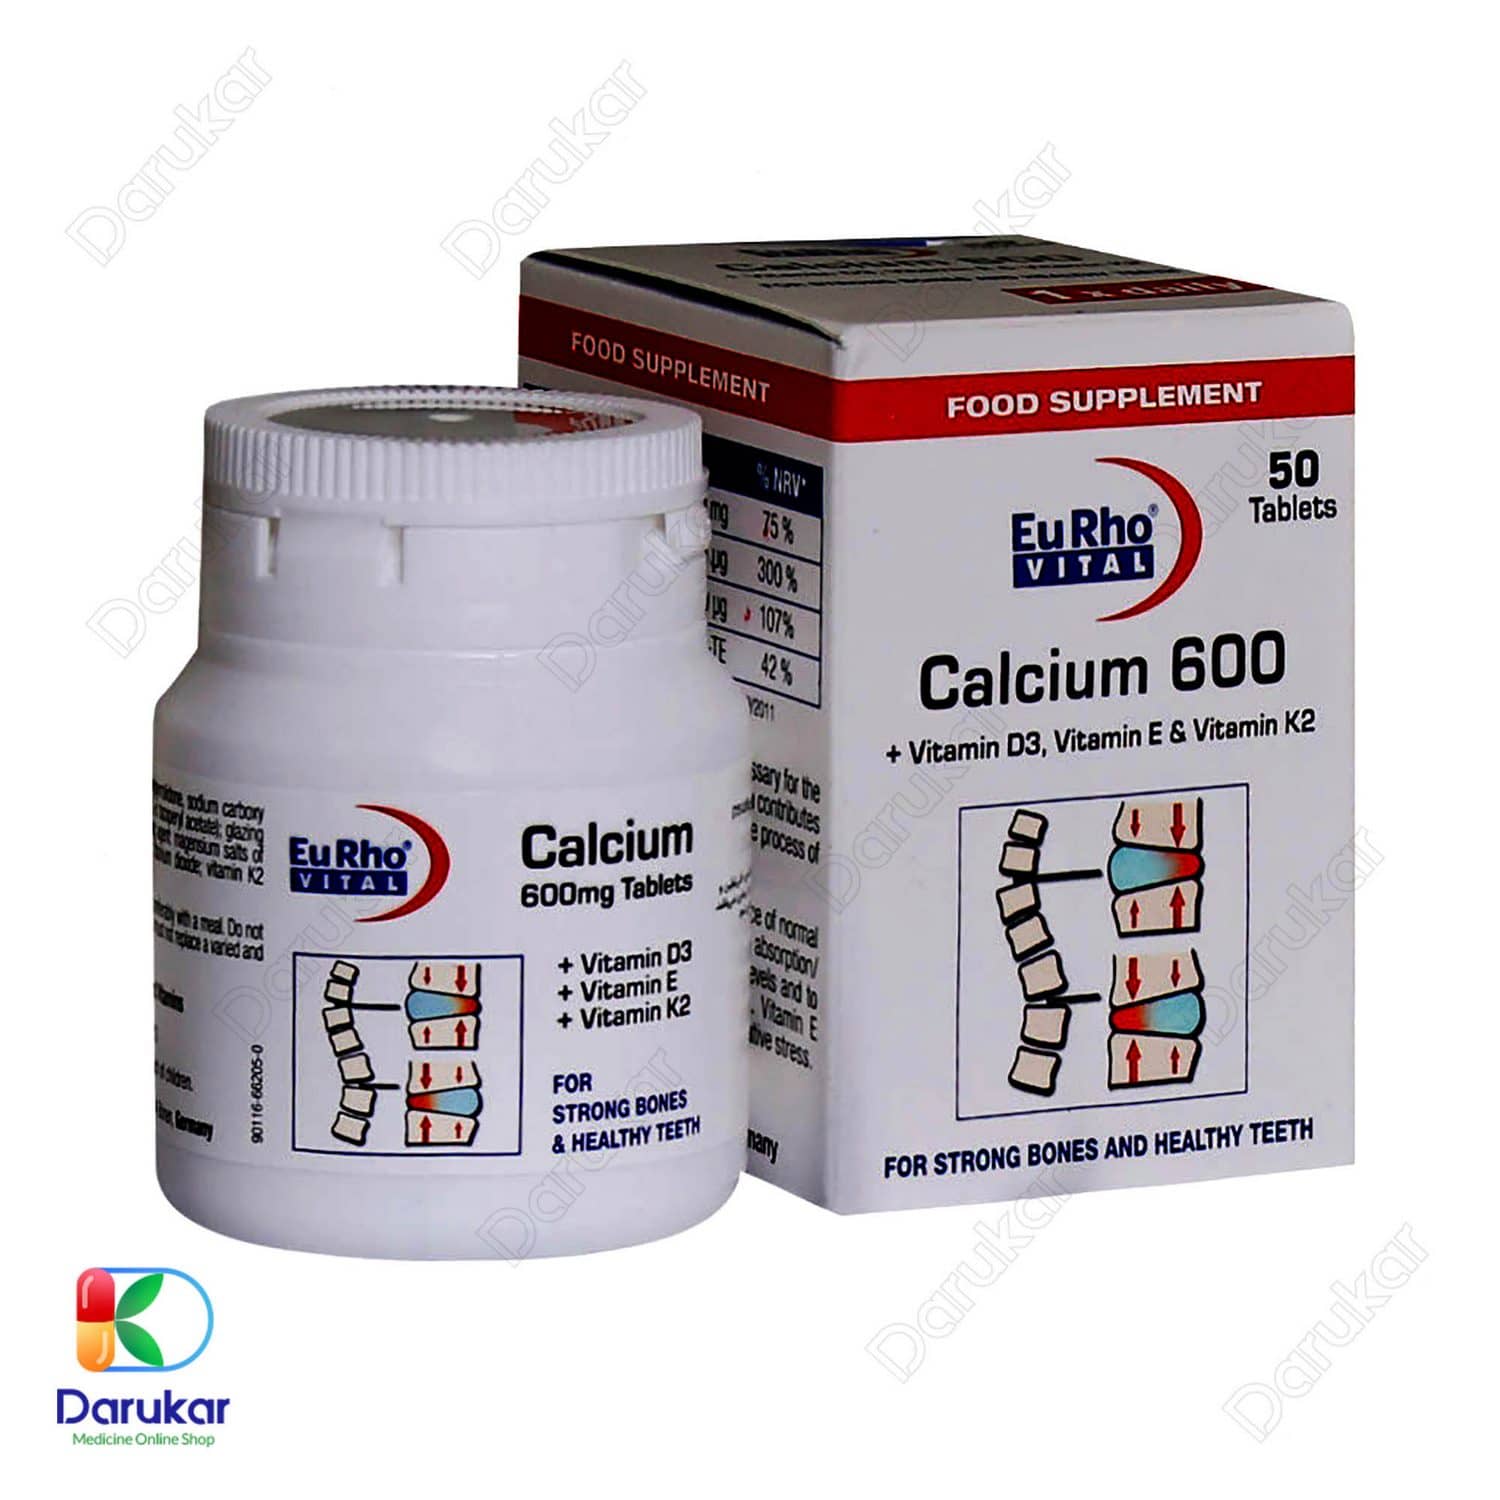 EurhoVital Calcium 600 mg tabs Image Gallery